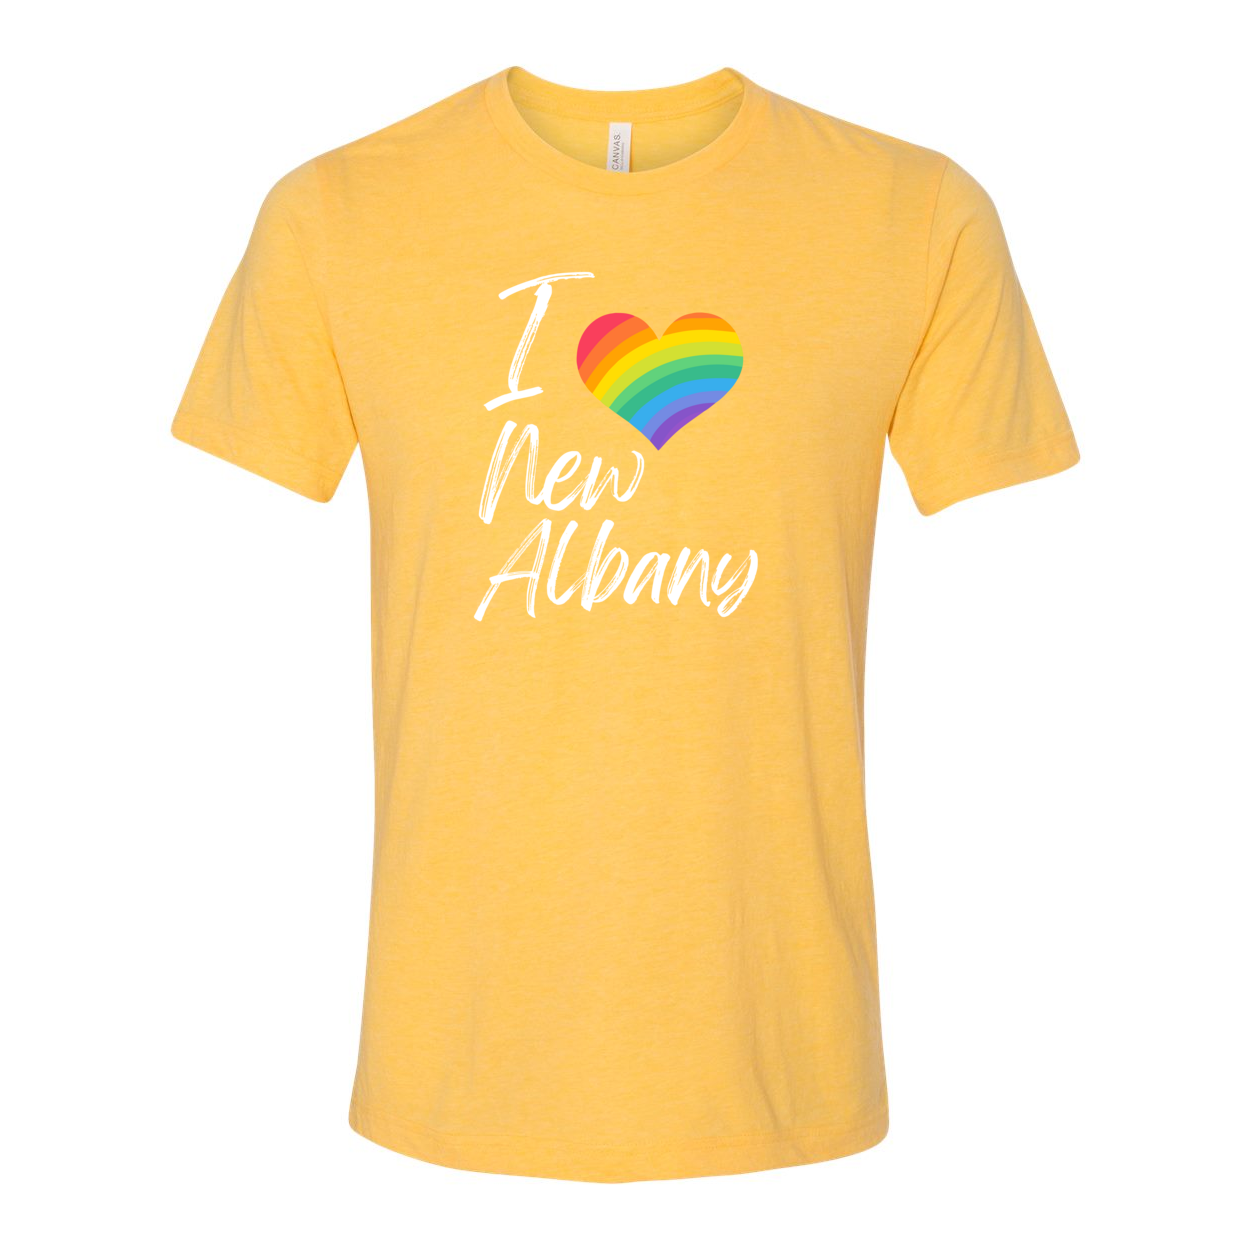 Adult Unisex City Rainbow Pride Heart Super Soft Short Sleeve Graphic Tee - New Albany